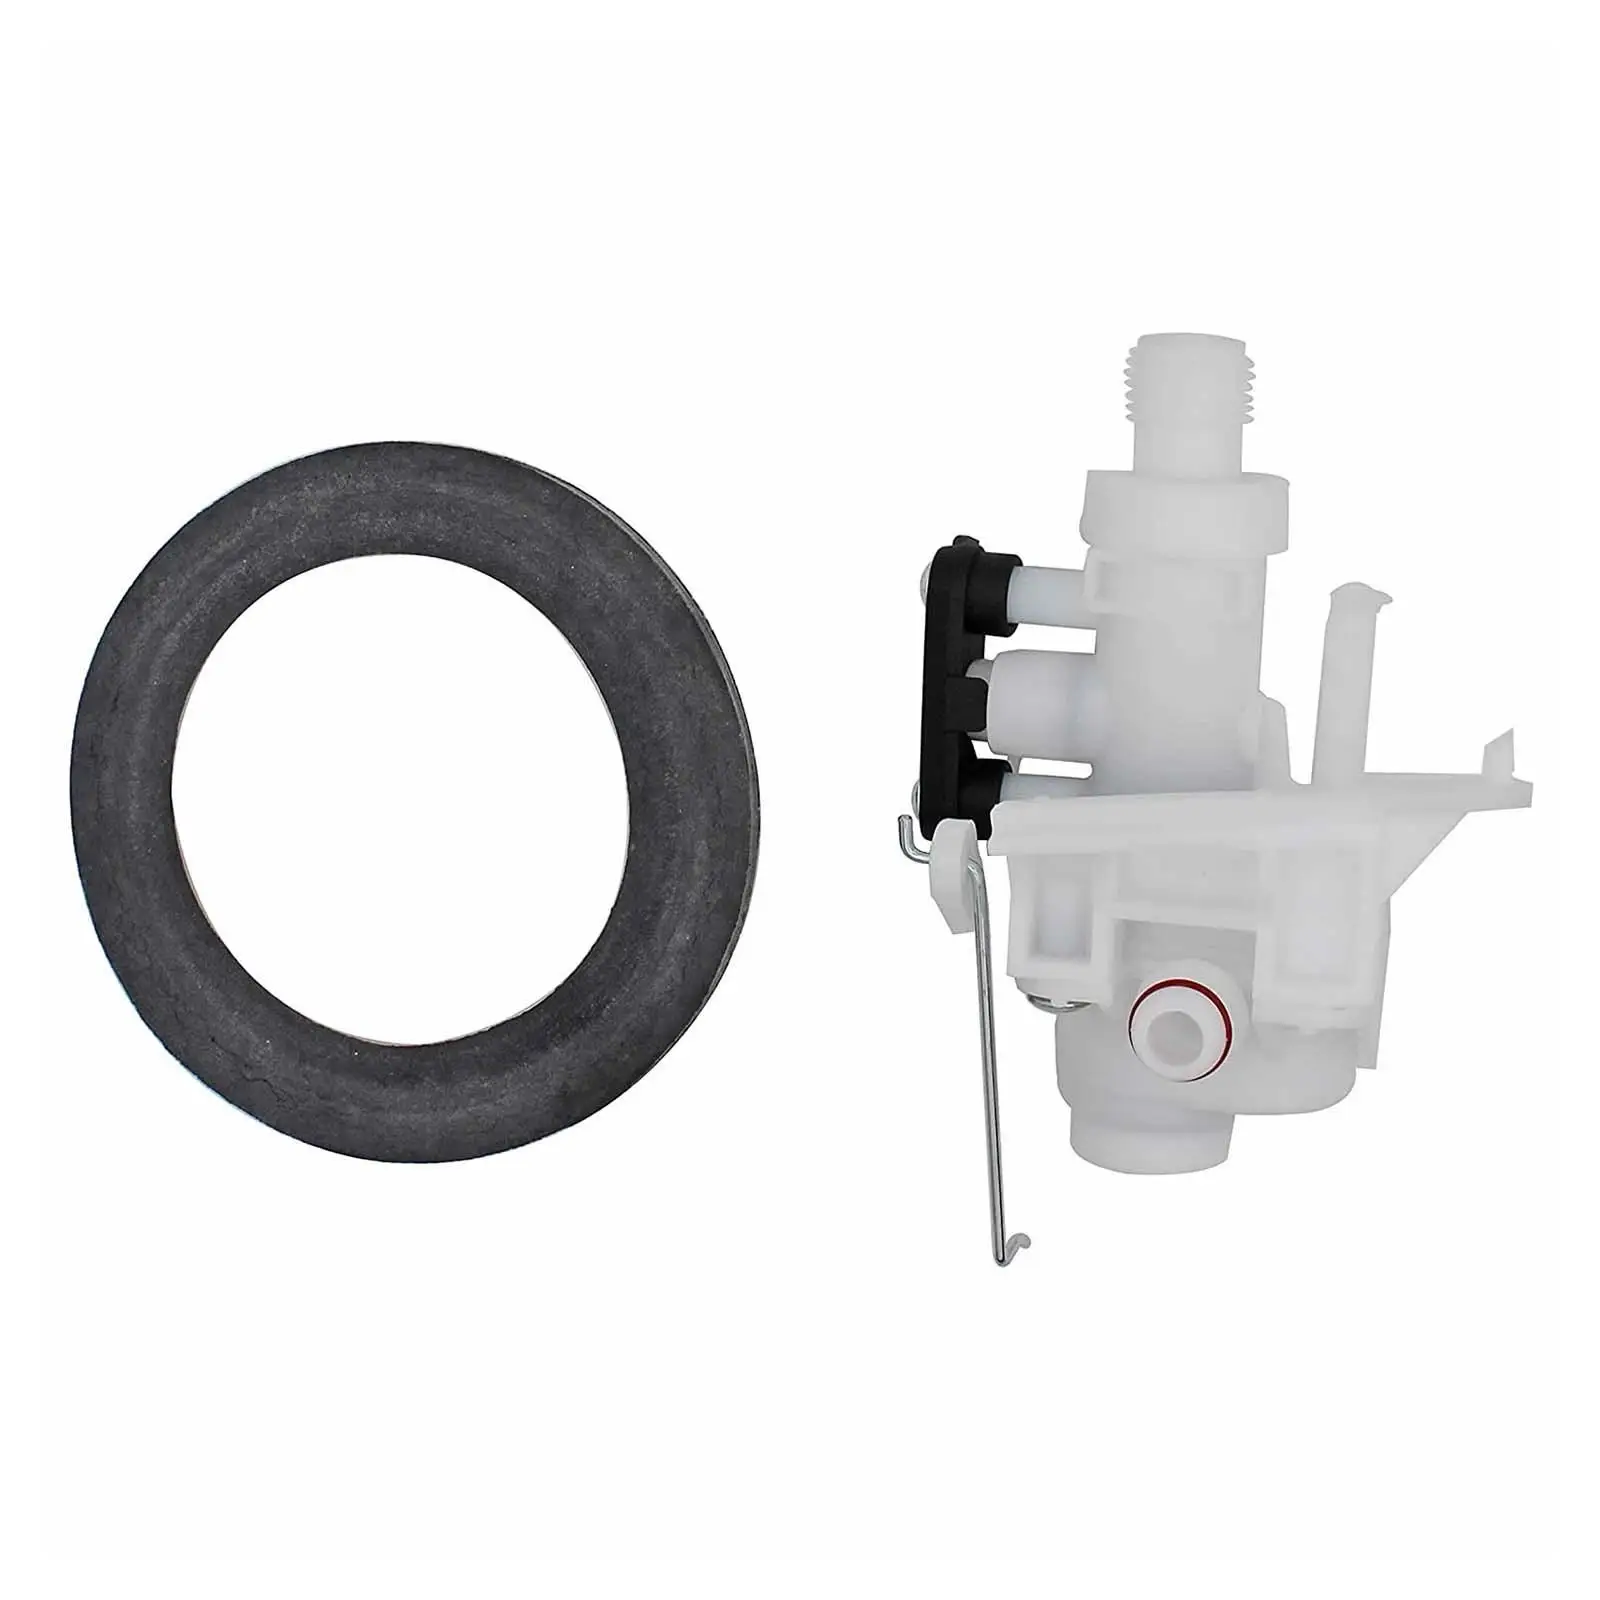 31705 RV Toilet Water Valve Professional Leak Resistant Camper Trailer Toilet Repair Kits for RV Motor Home Replace Accessories